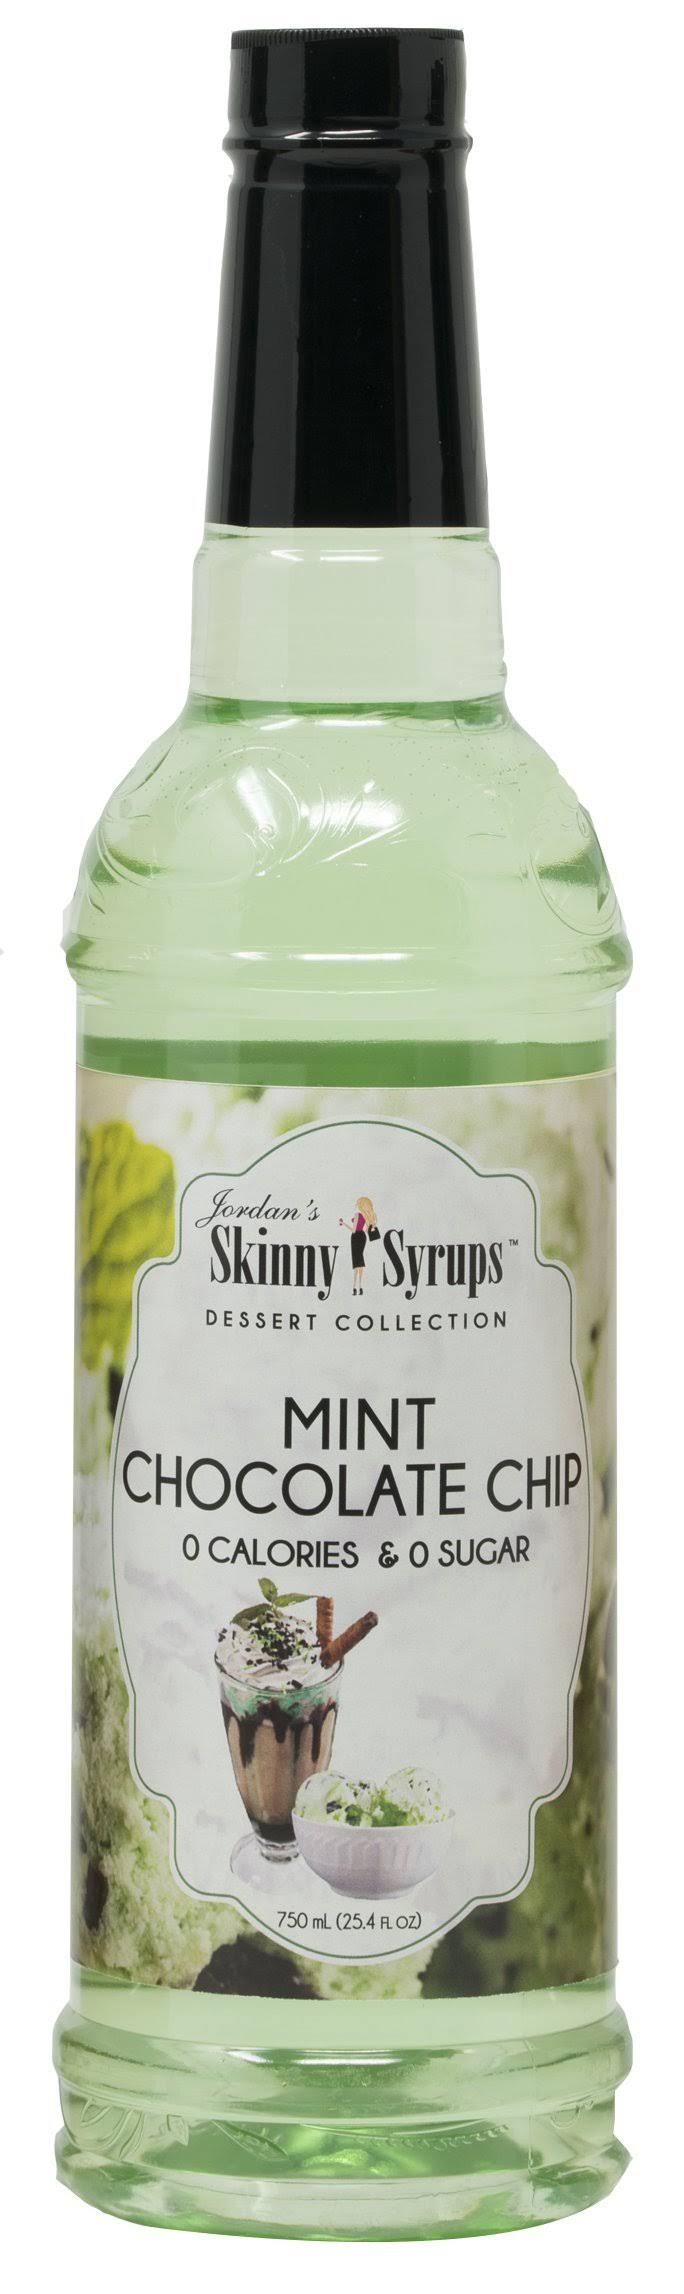 Jordan's Skinny Syrups Sugar Free Syrup 750ml / Mint Chocolate Chip